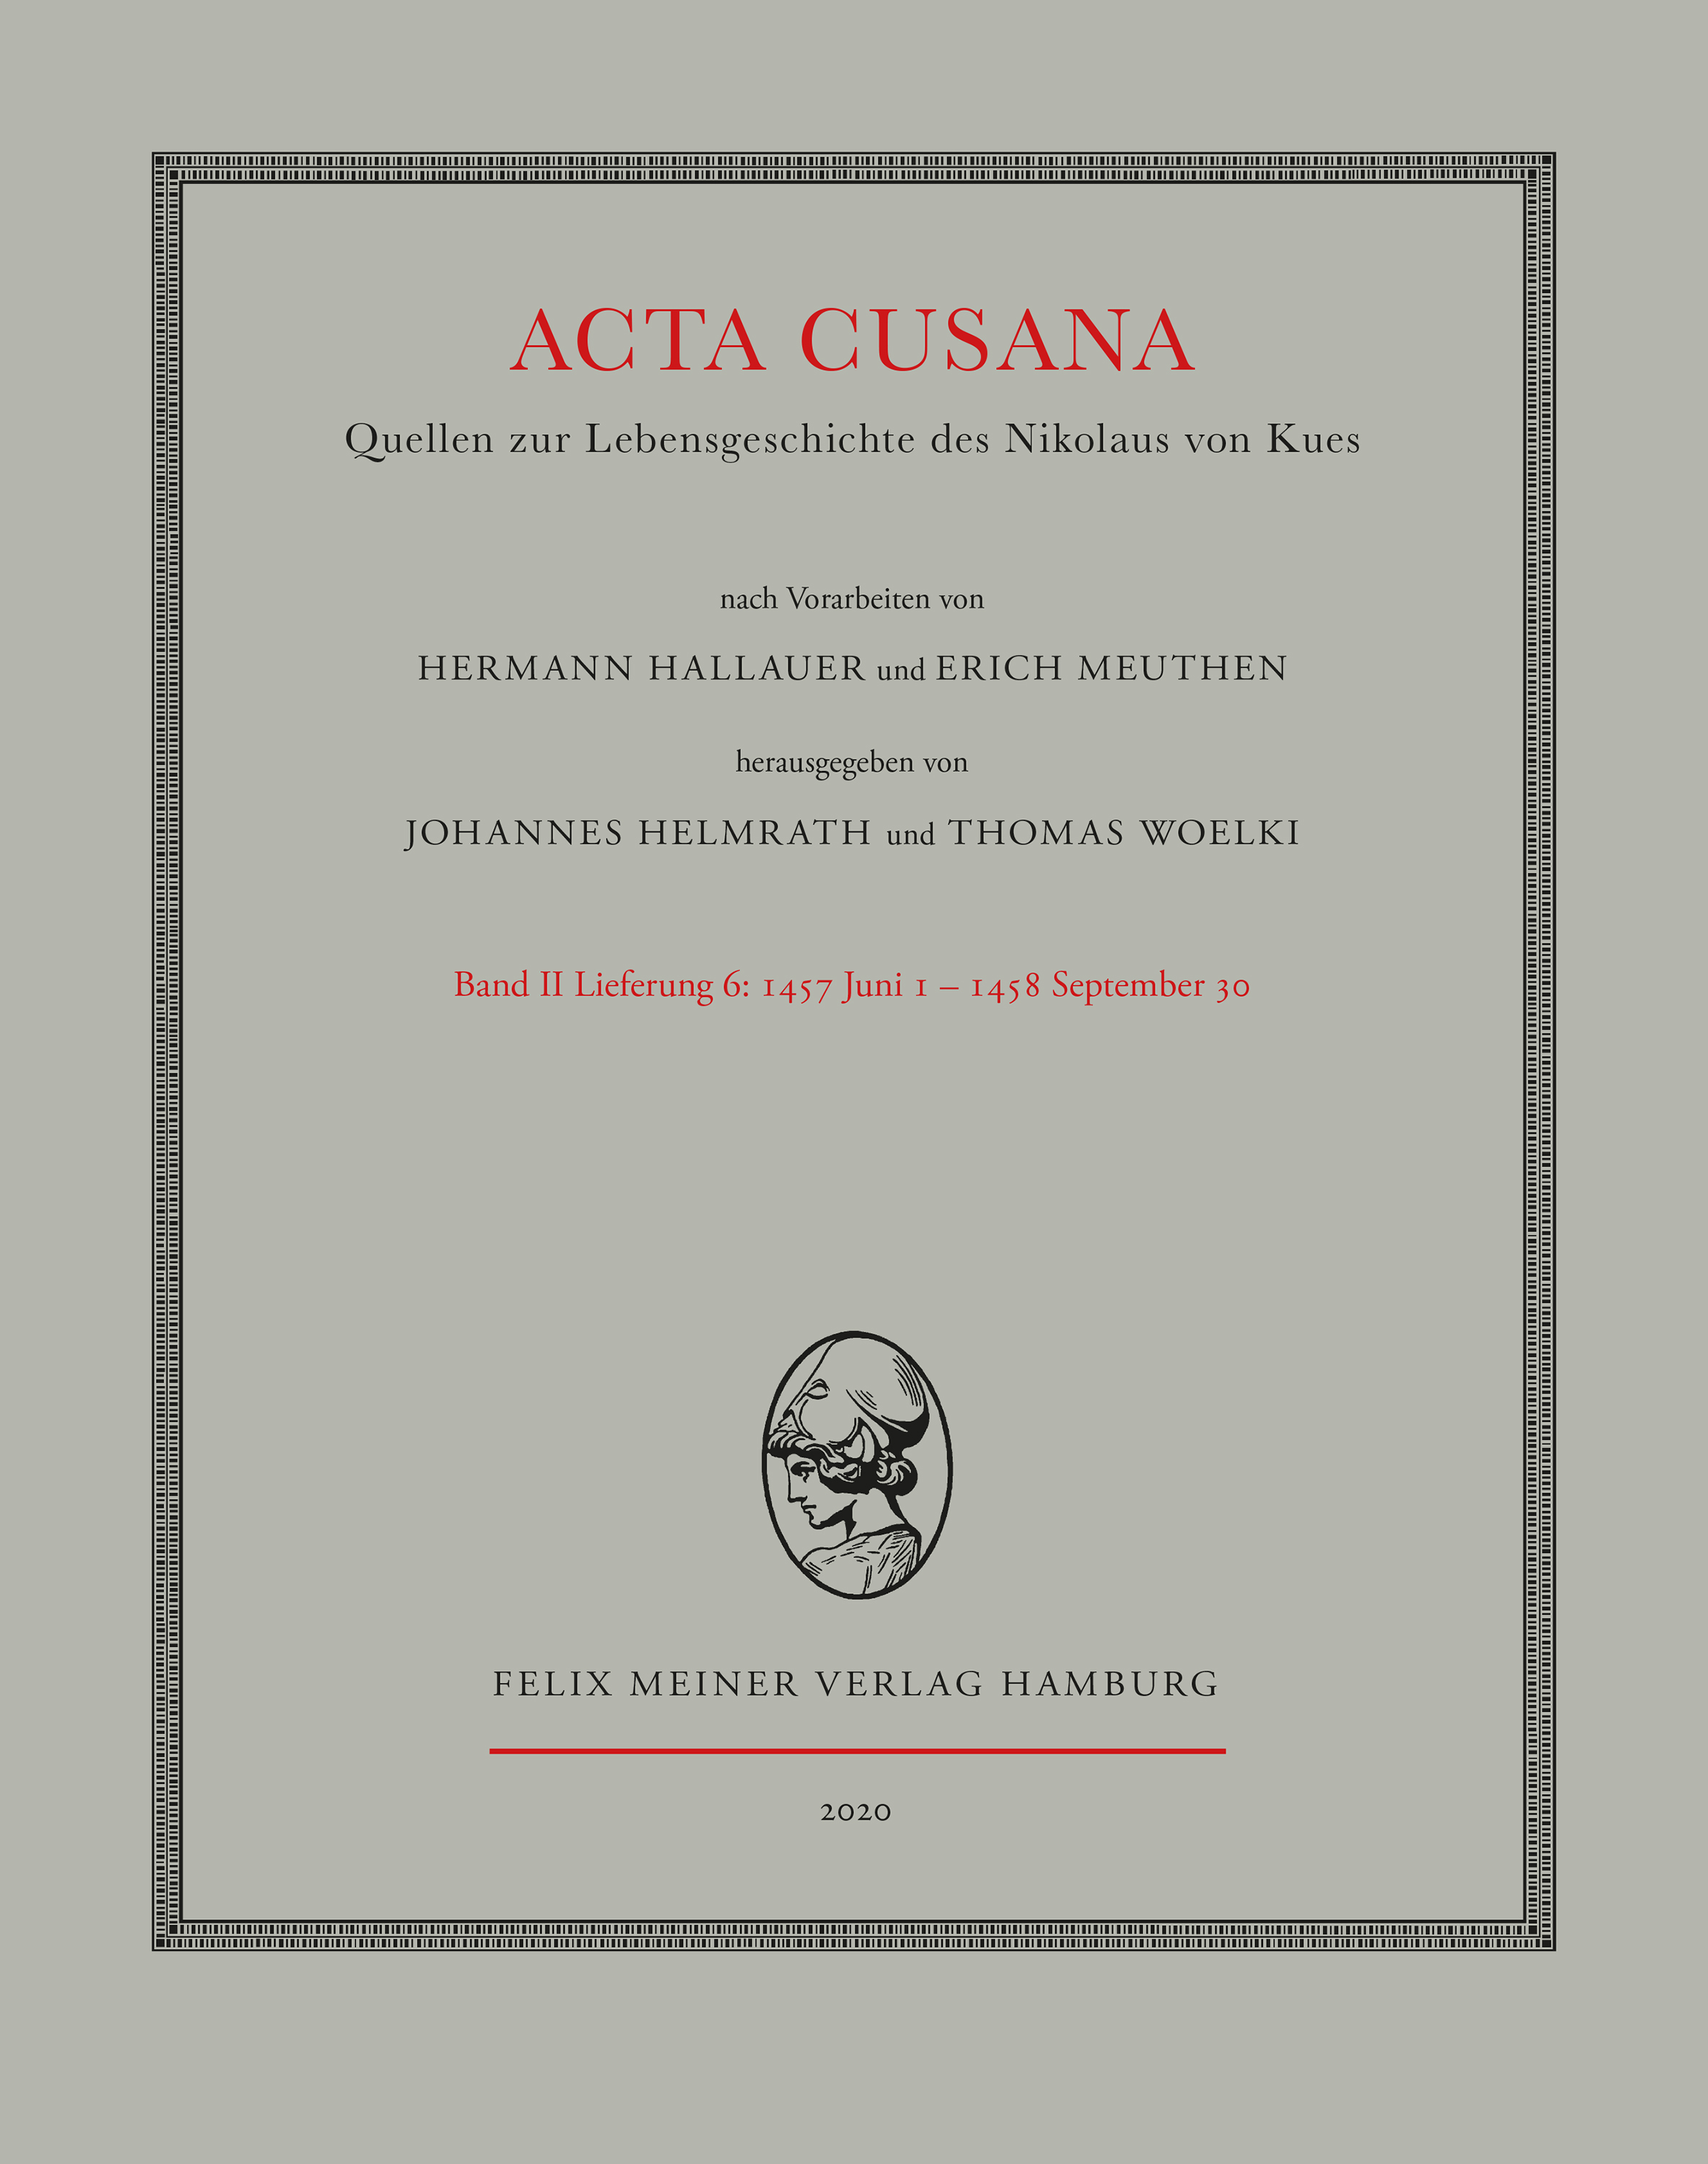 Acta Cusana, Band II, Lieferung 6